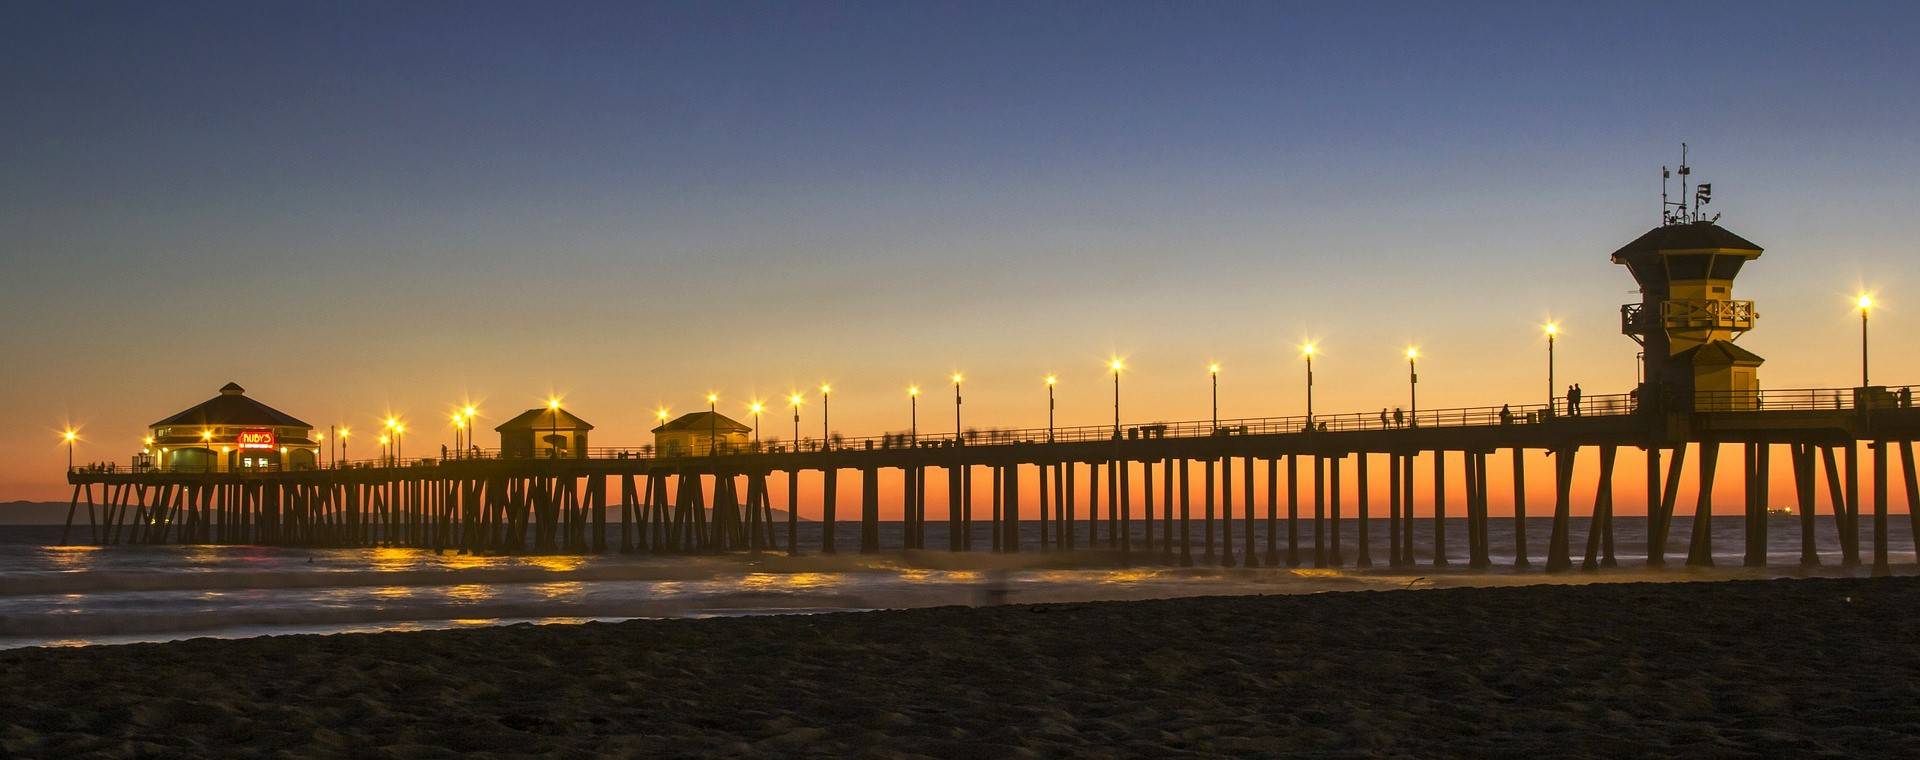 Sunset at Jetty Pier in Huntington Beach, Orange County, CA